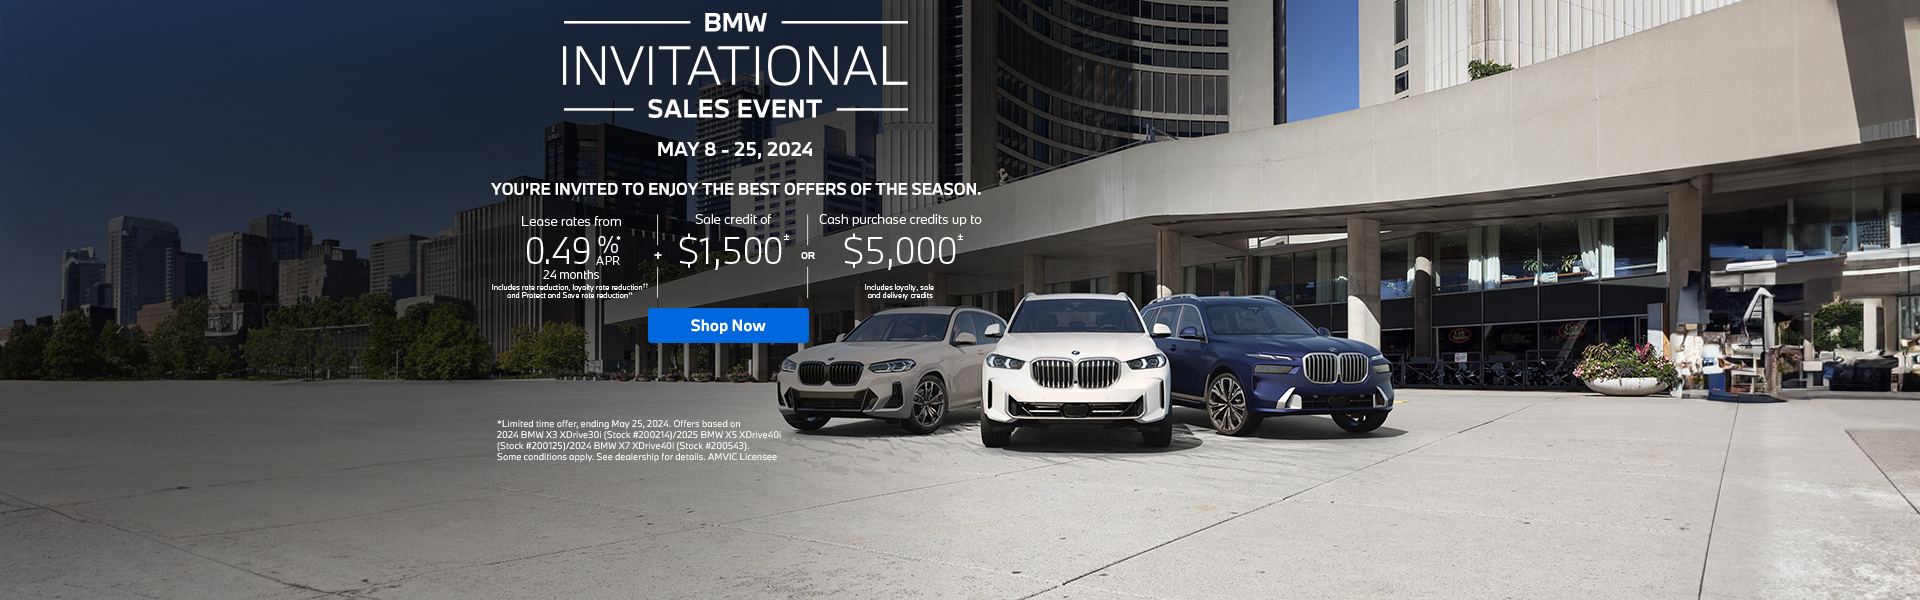 BMW Invitational Sales Event